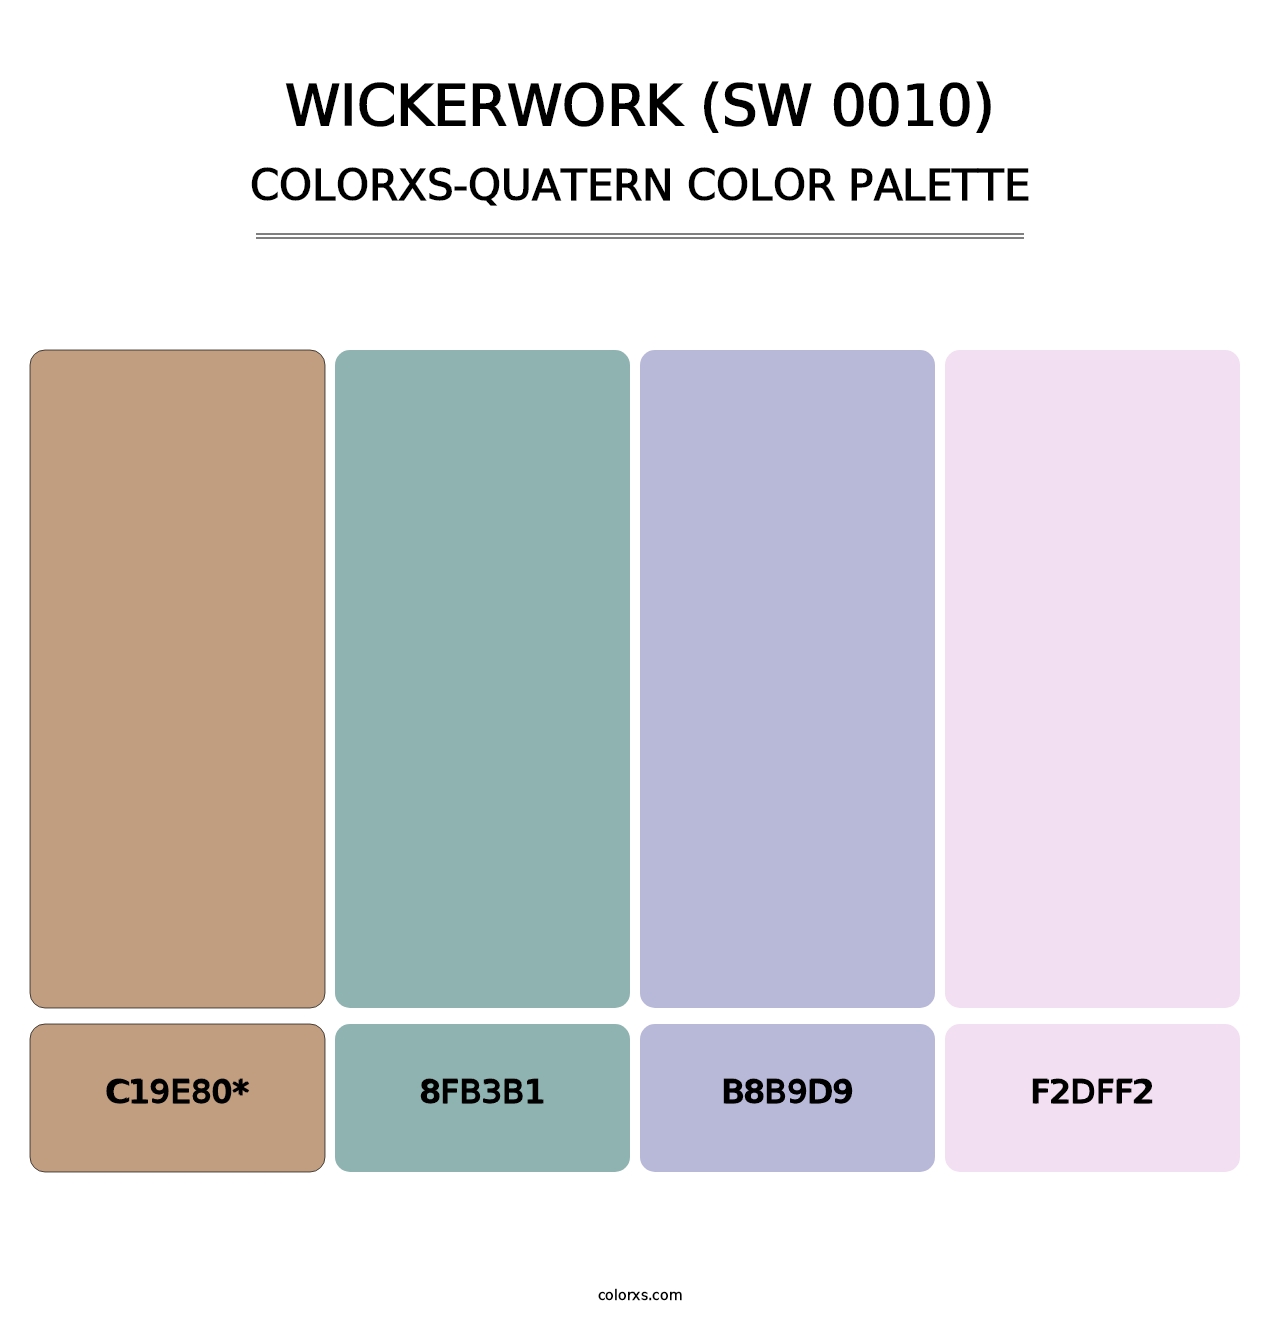 Wickerwork (SW 0010) - Colorxs Quatern Palette